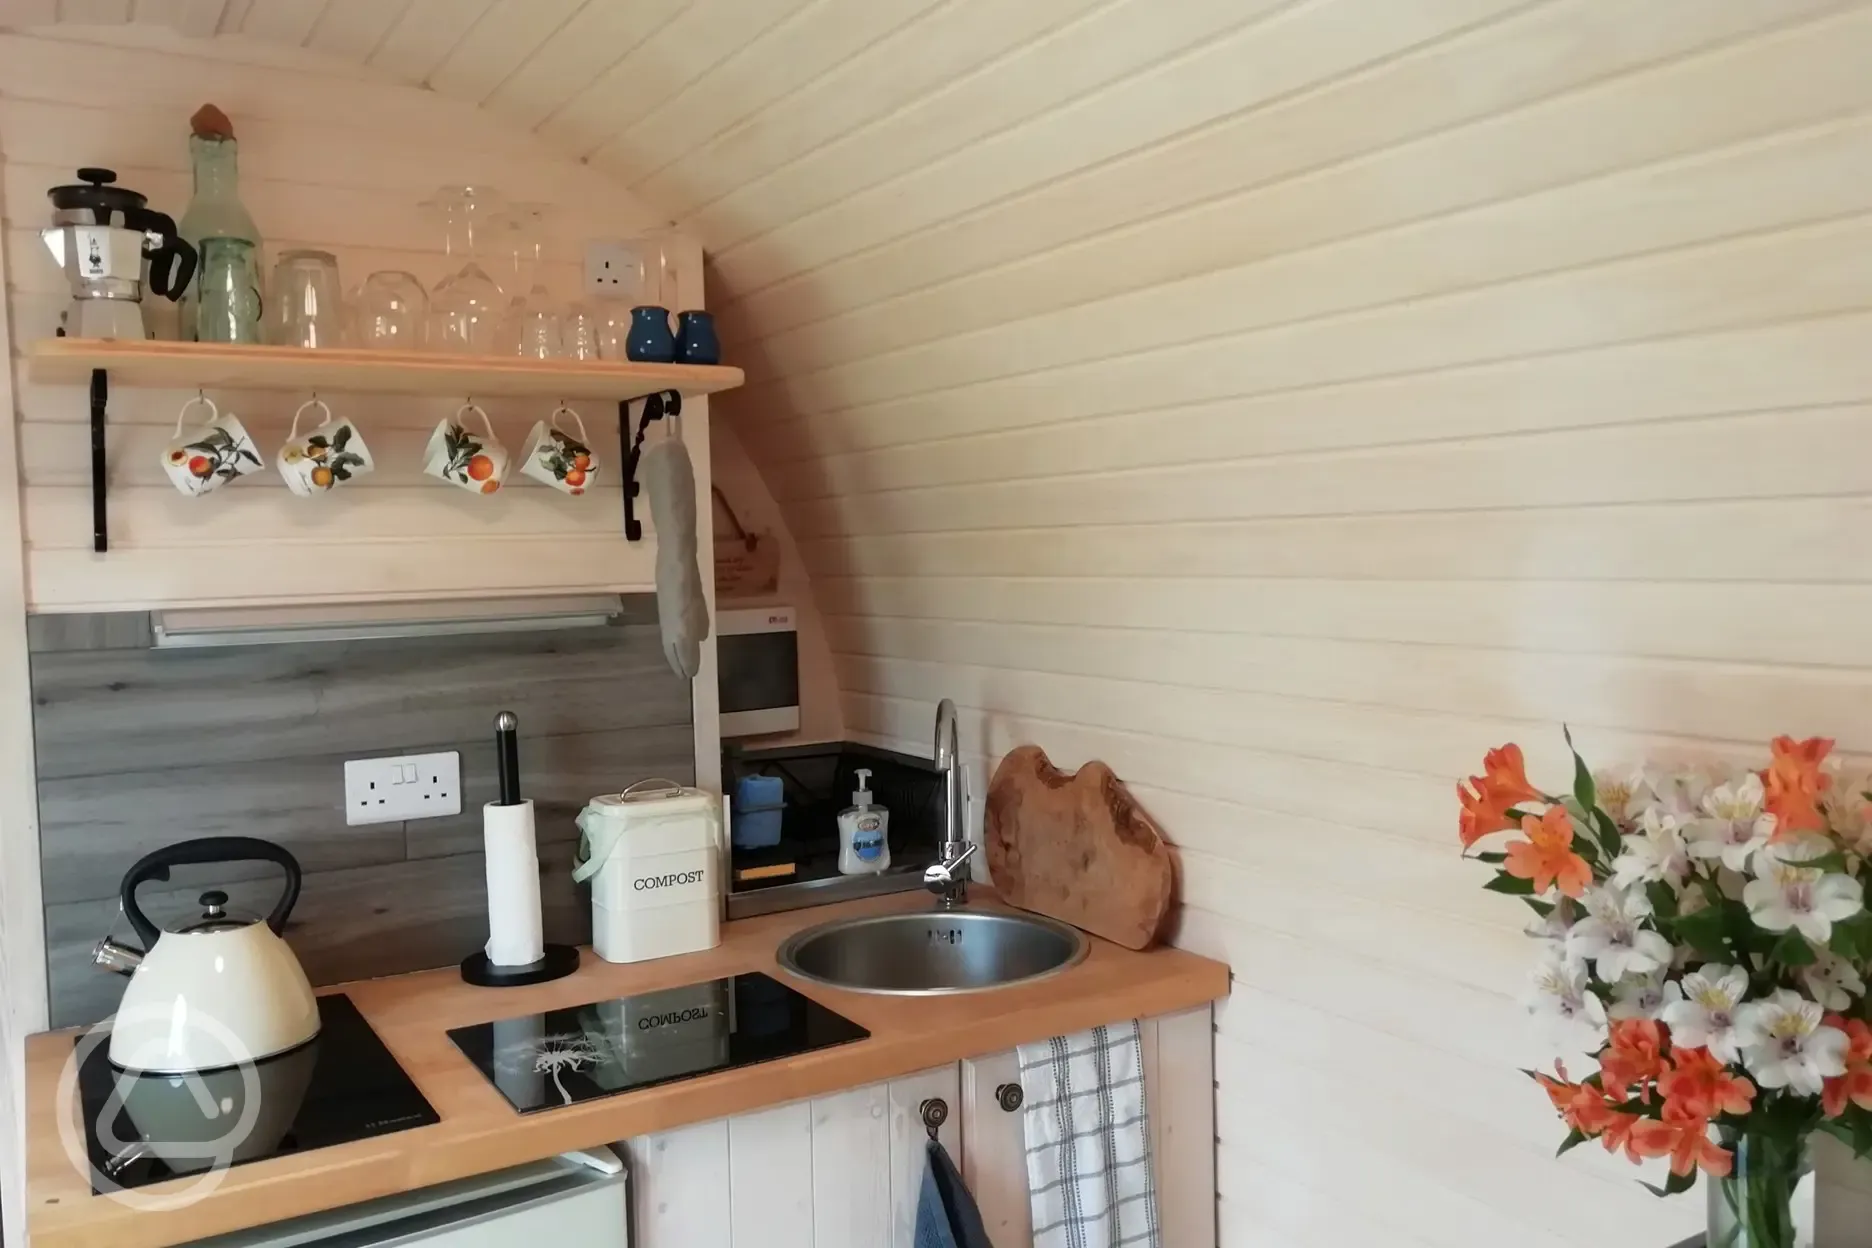 Kitchenette in the Iglu Hut